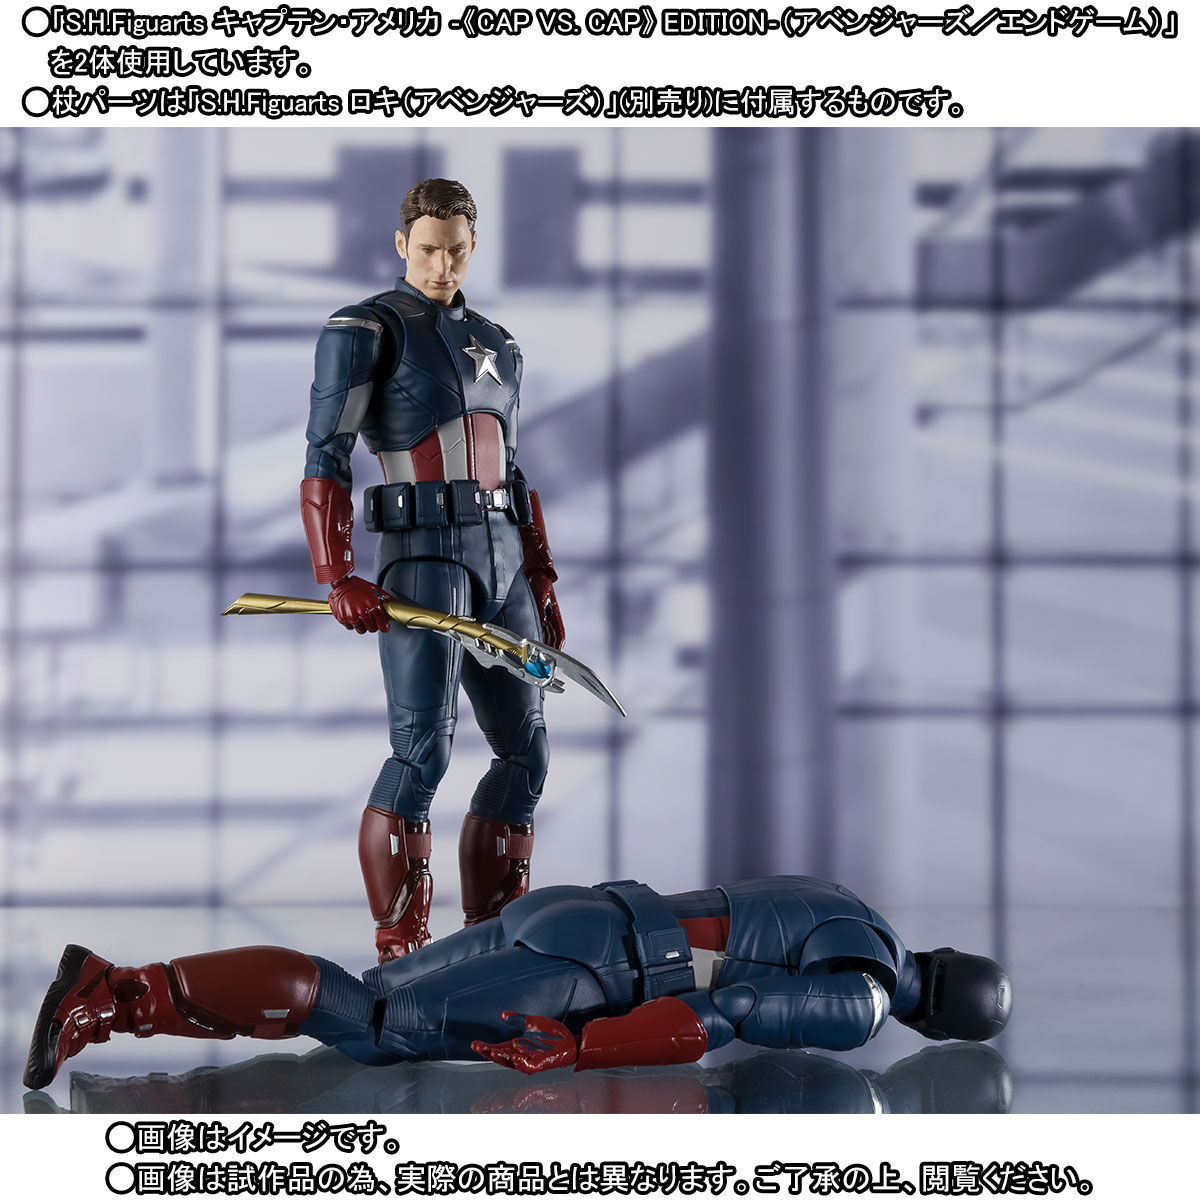 Bandai: S.H. Figuarts Avengers Endgame Captain America (Cap vs 